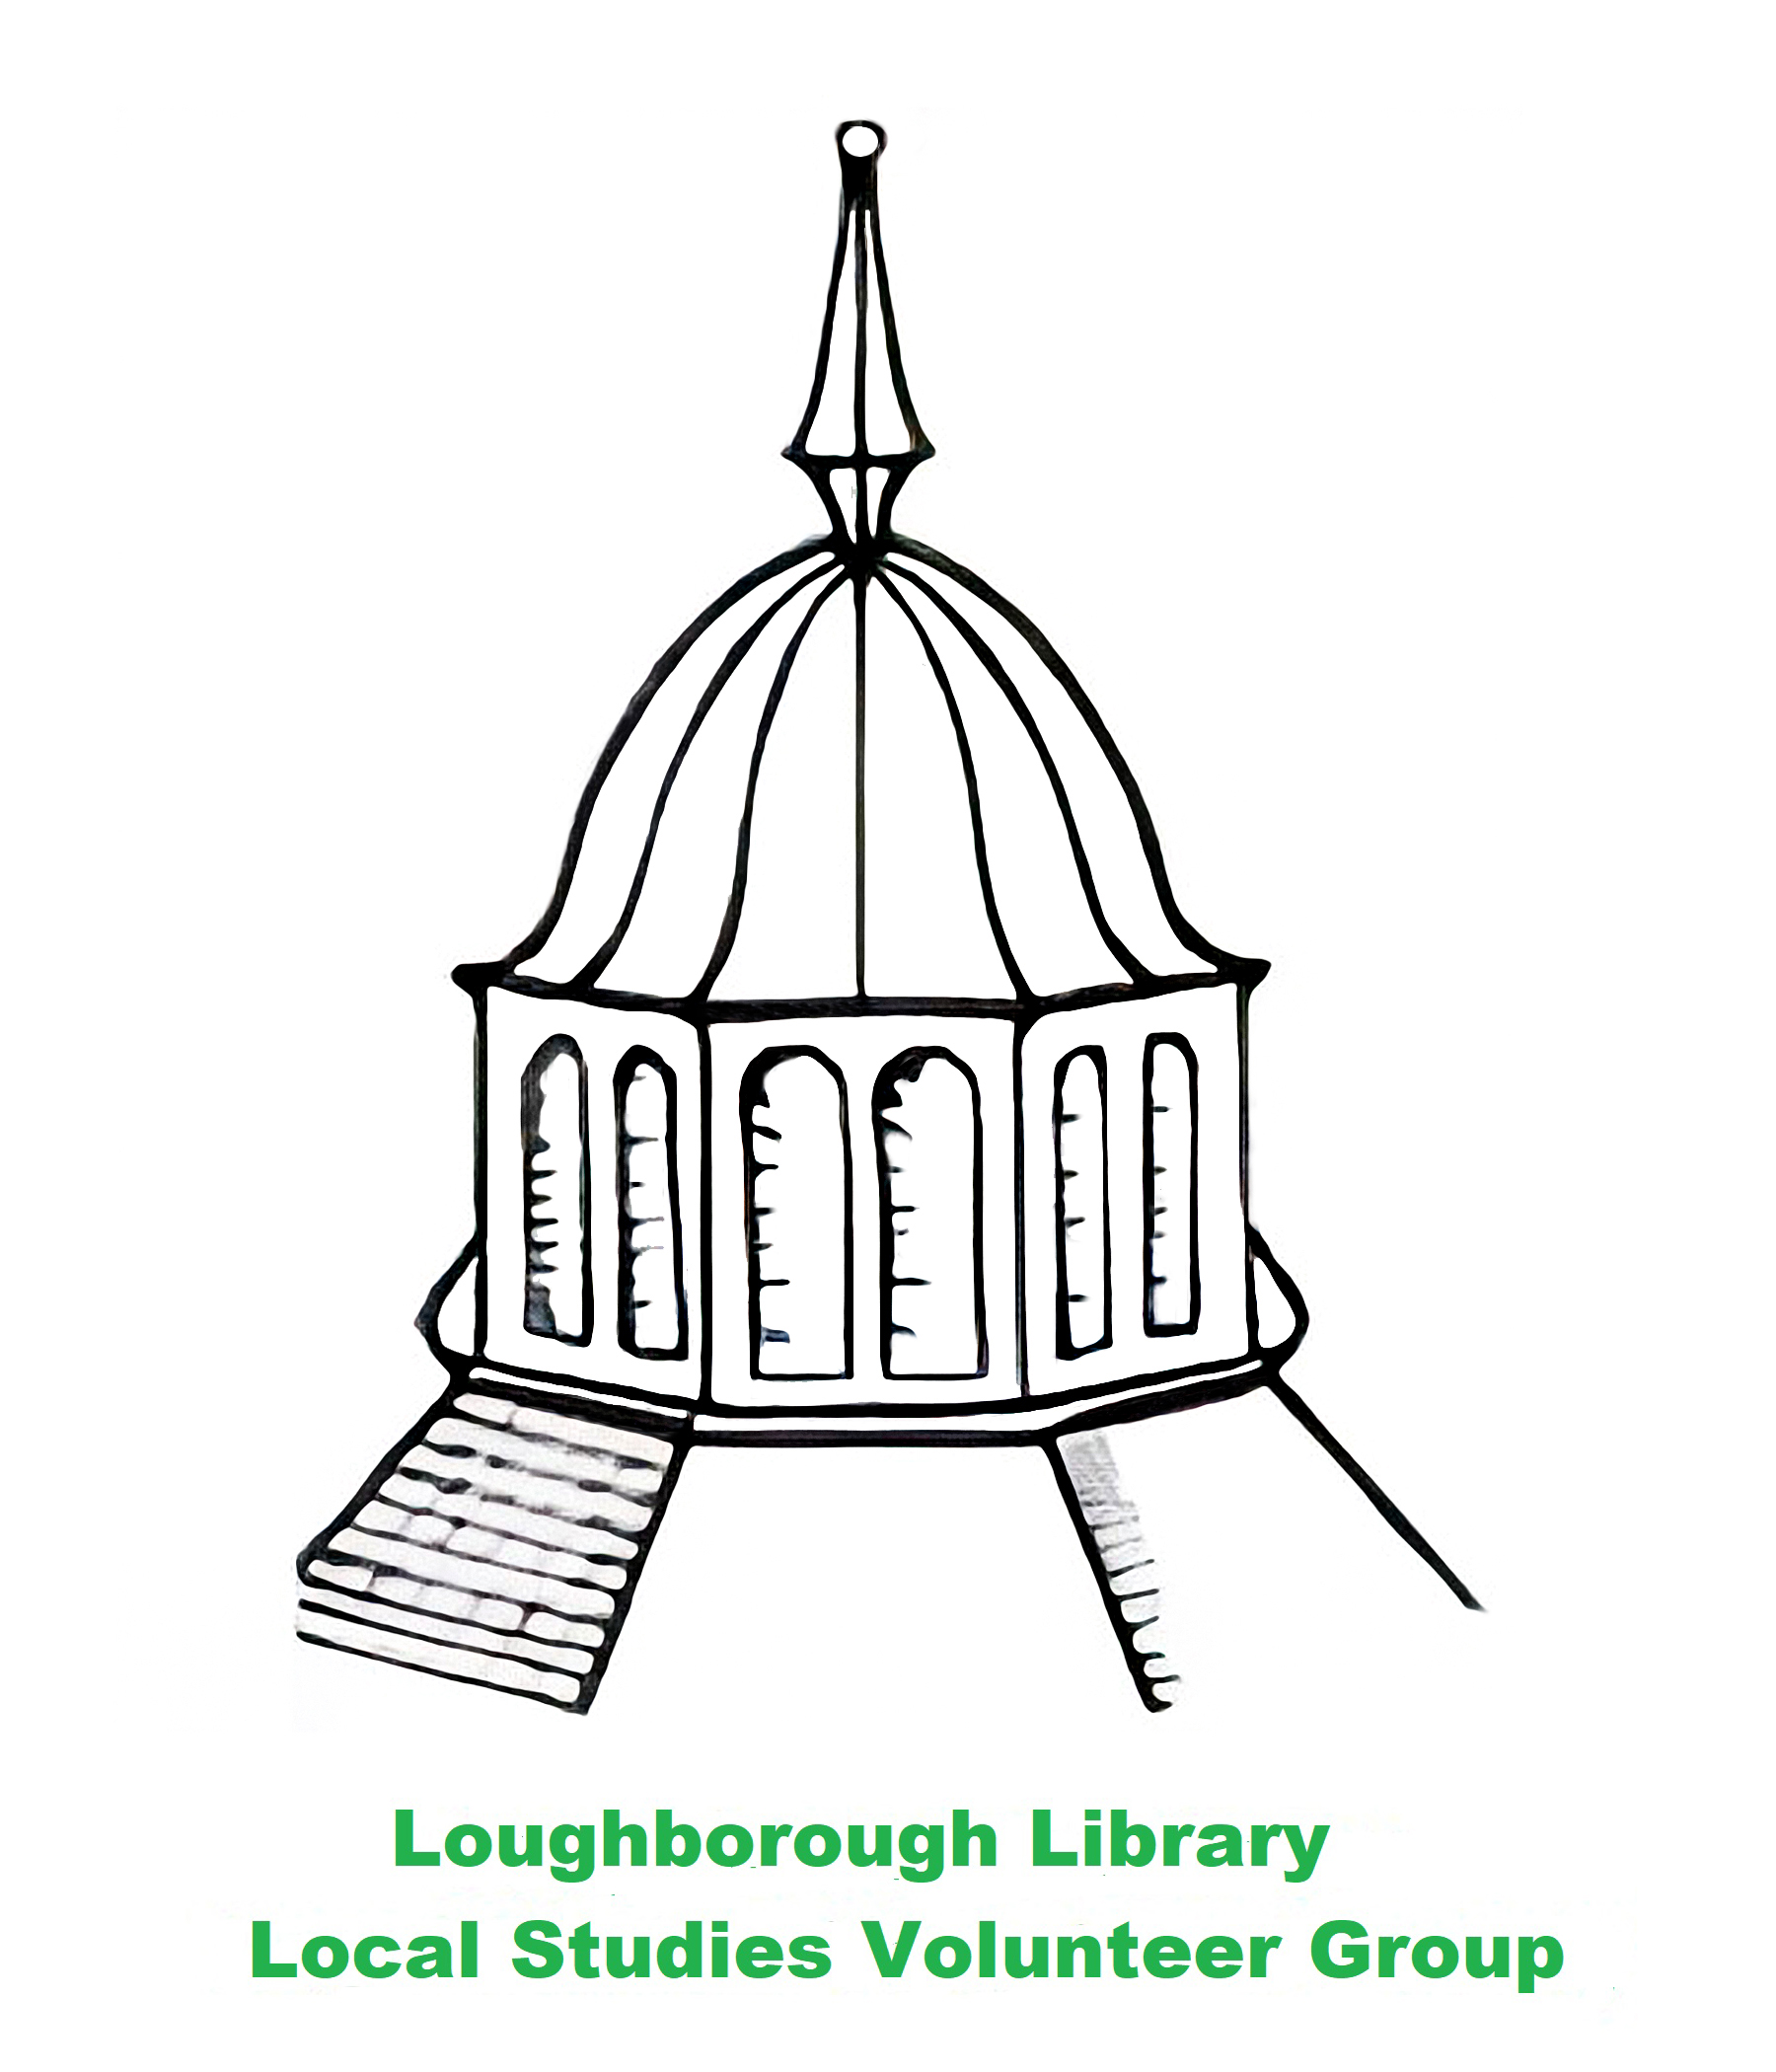  Loughborough Library Local Studies Volunteers